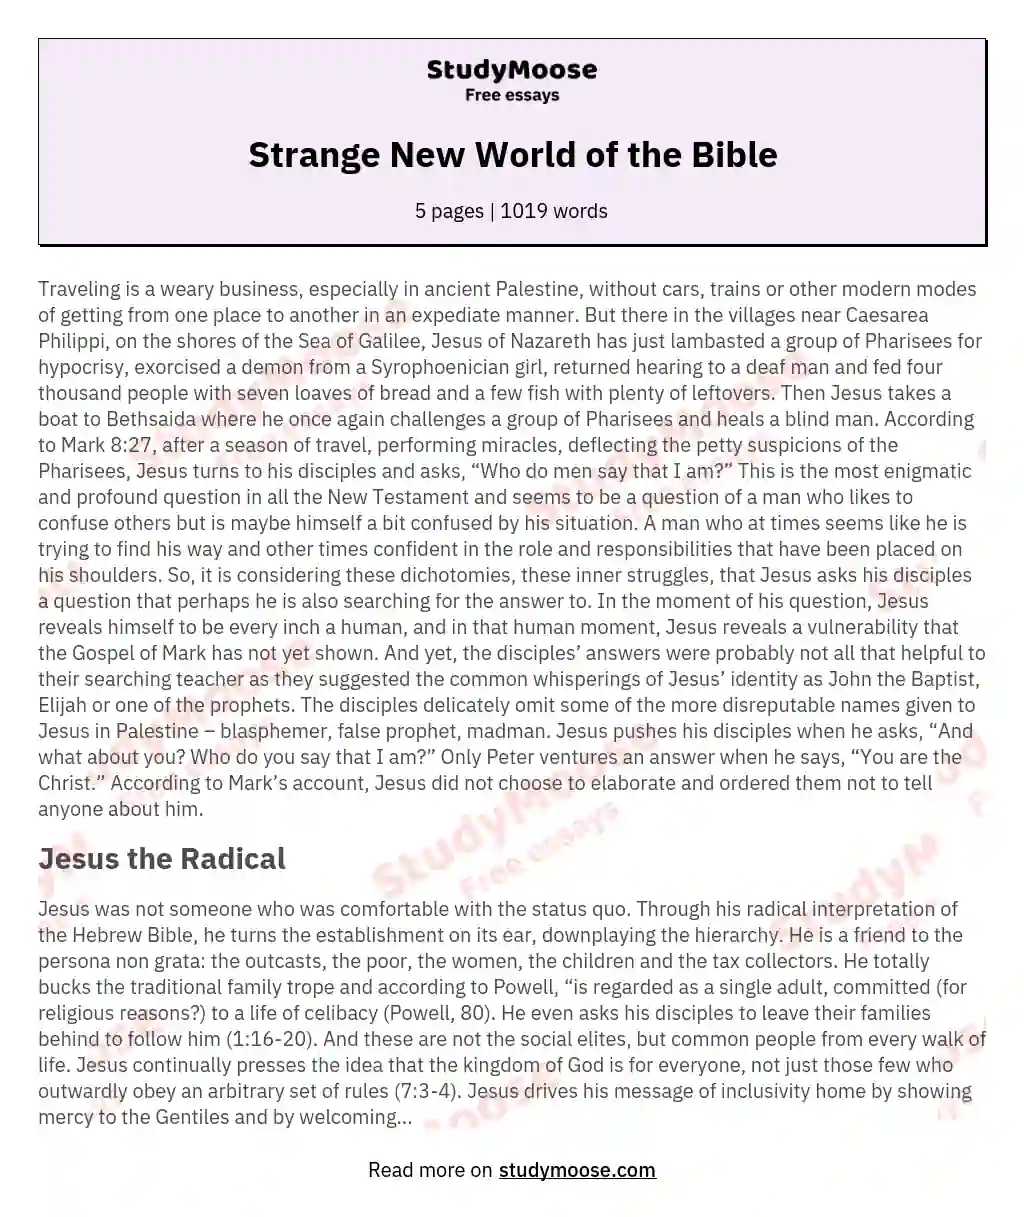 Strange New World of the Bible essay